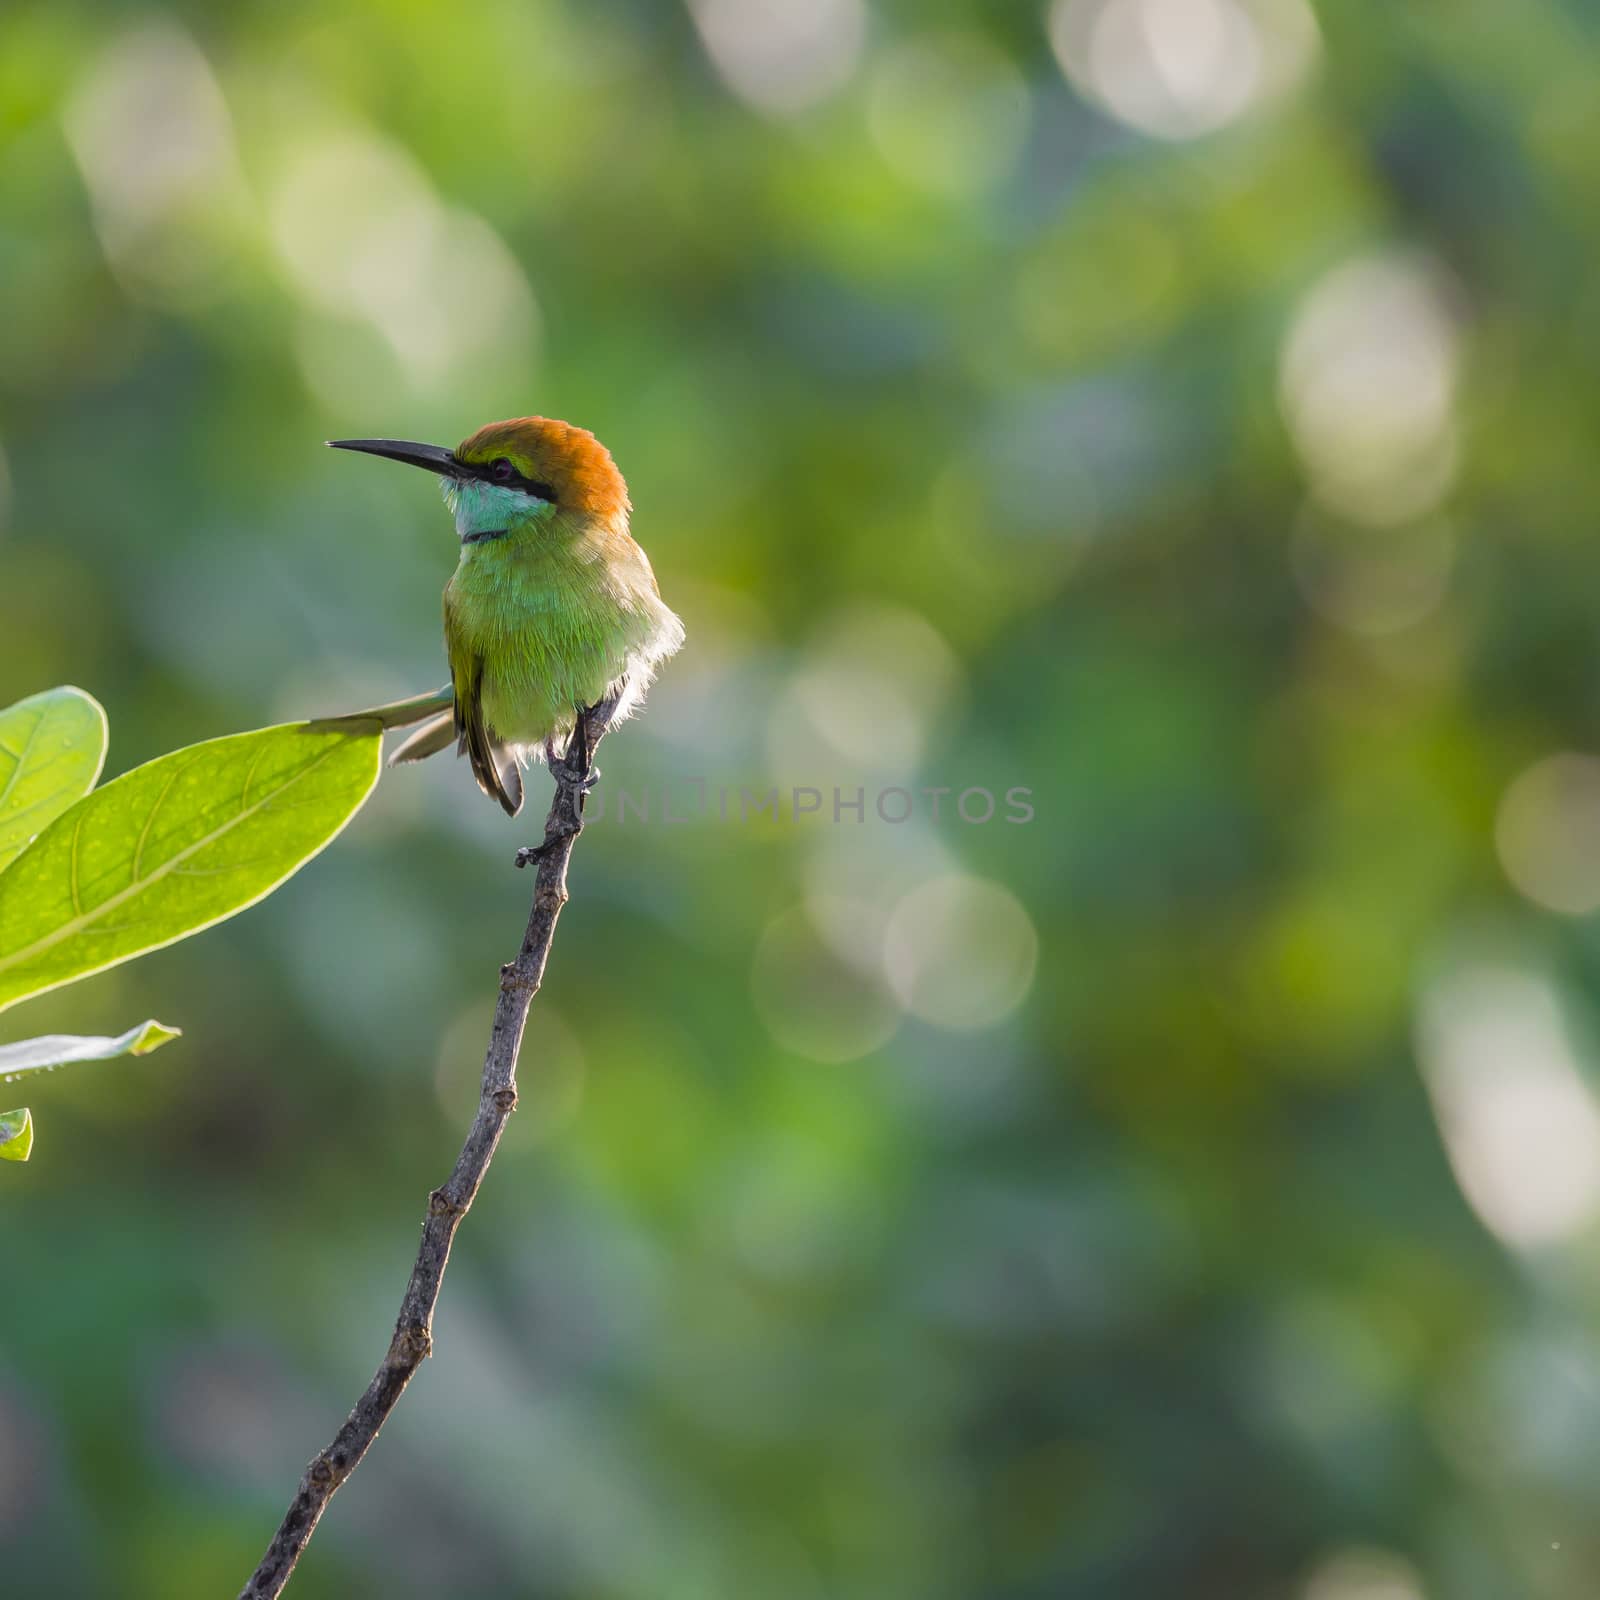 Merops ornatus, bee-eater on the tree

